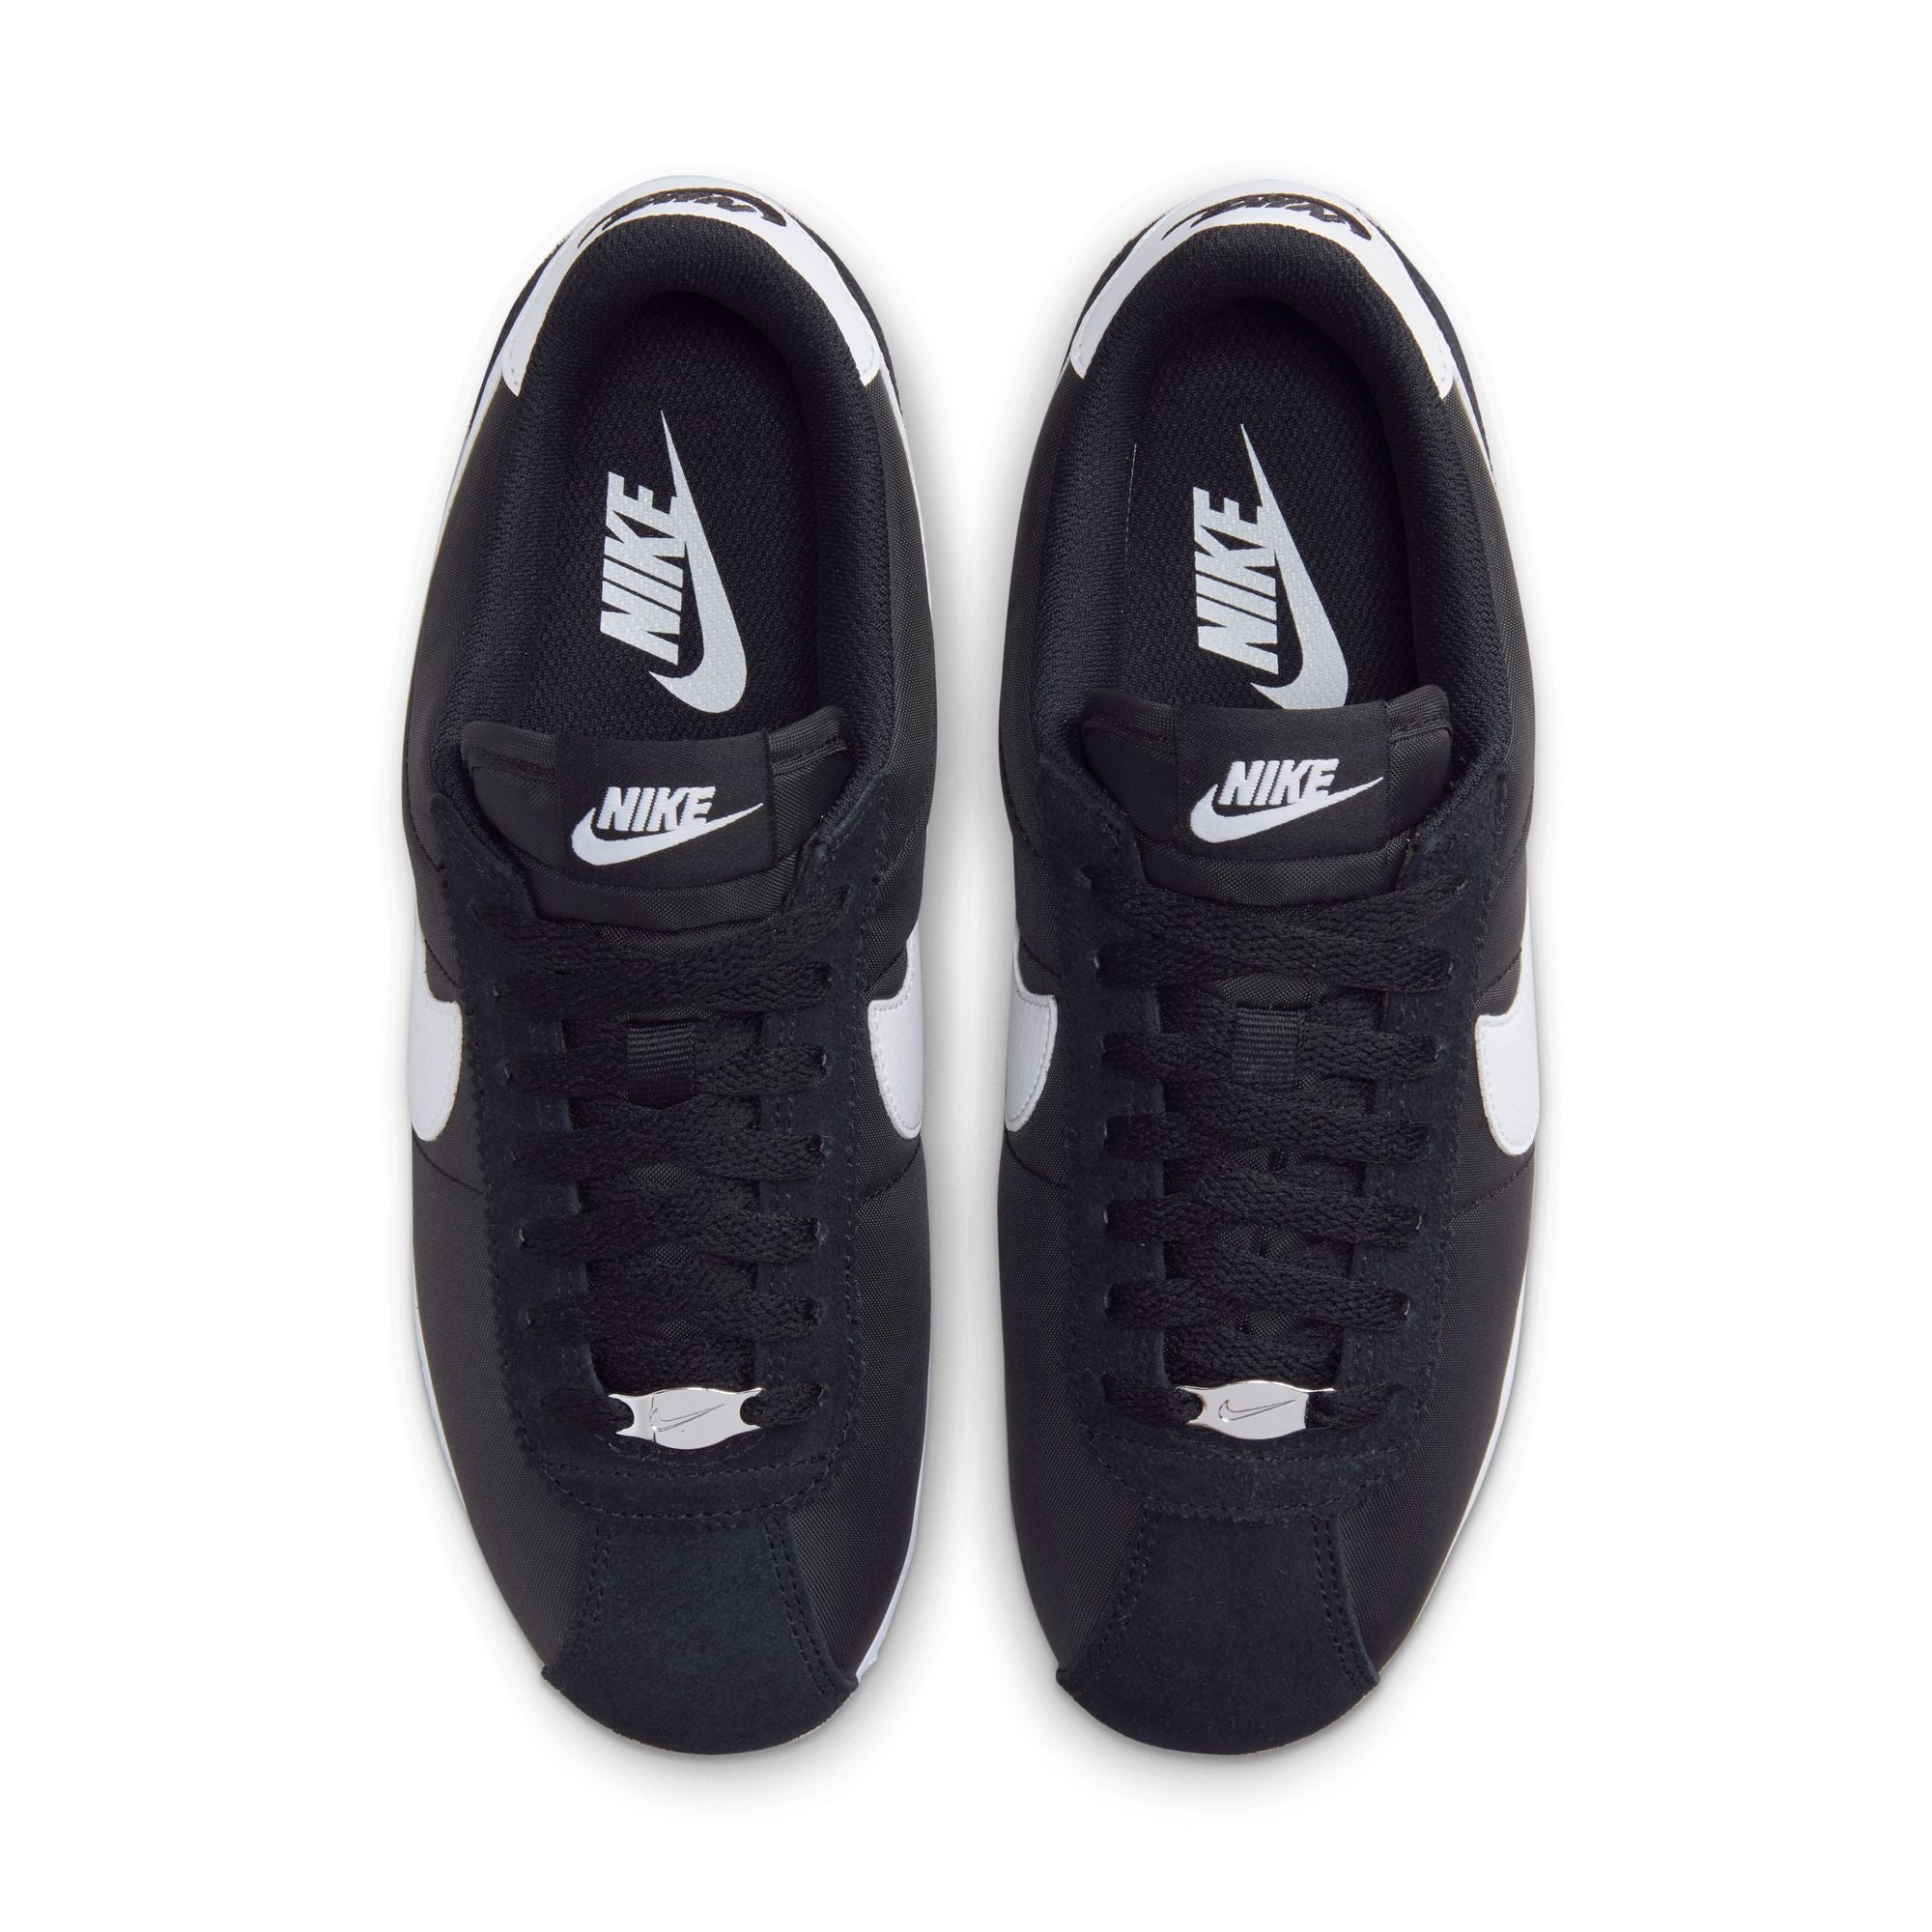 NIKE - Nike Wmns Cortez - (Black/White)